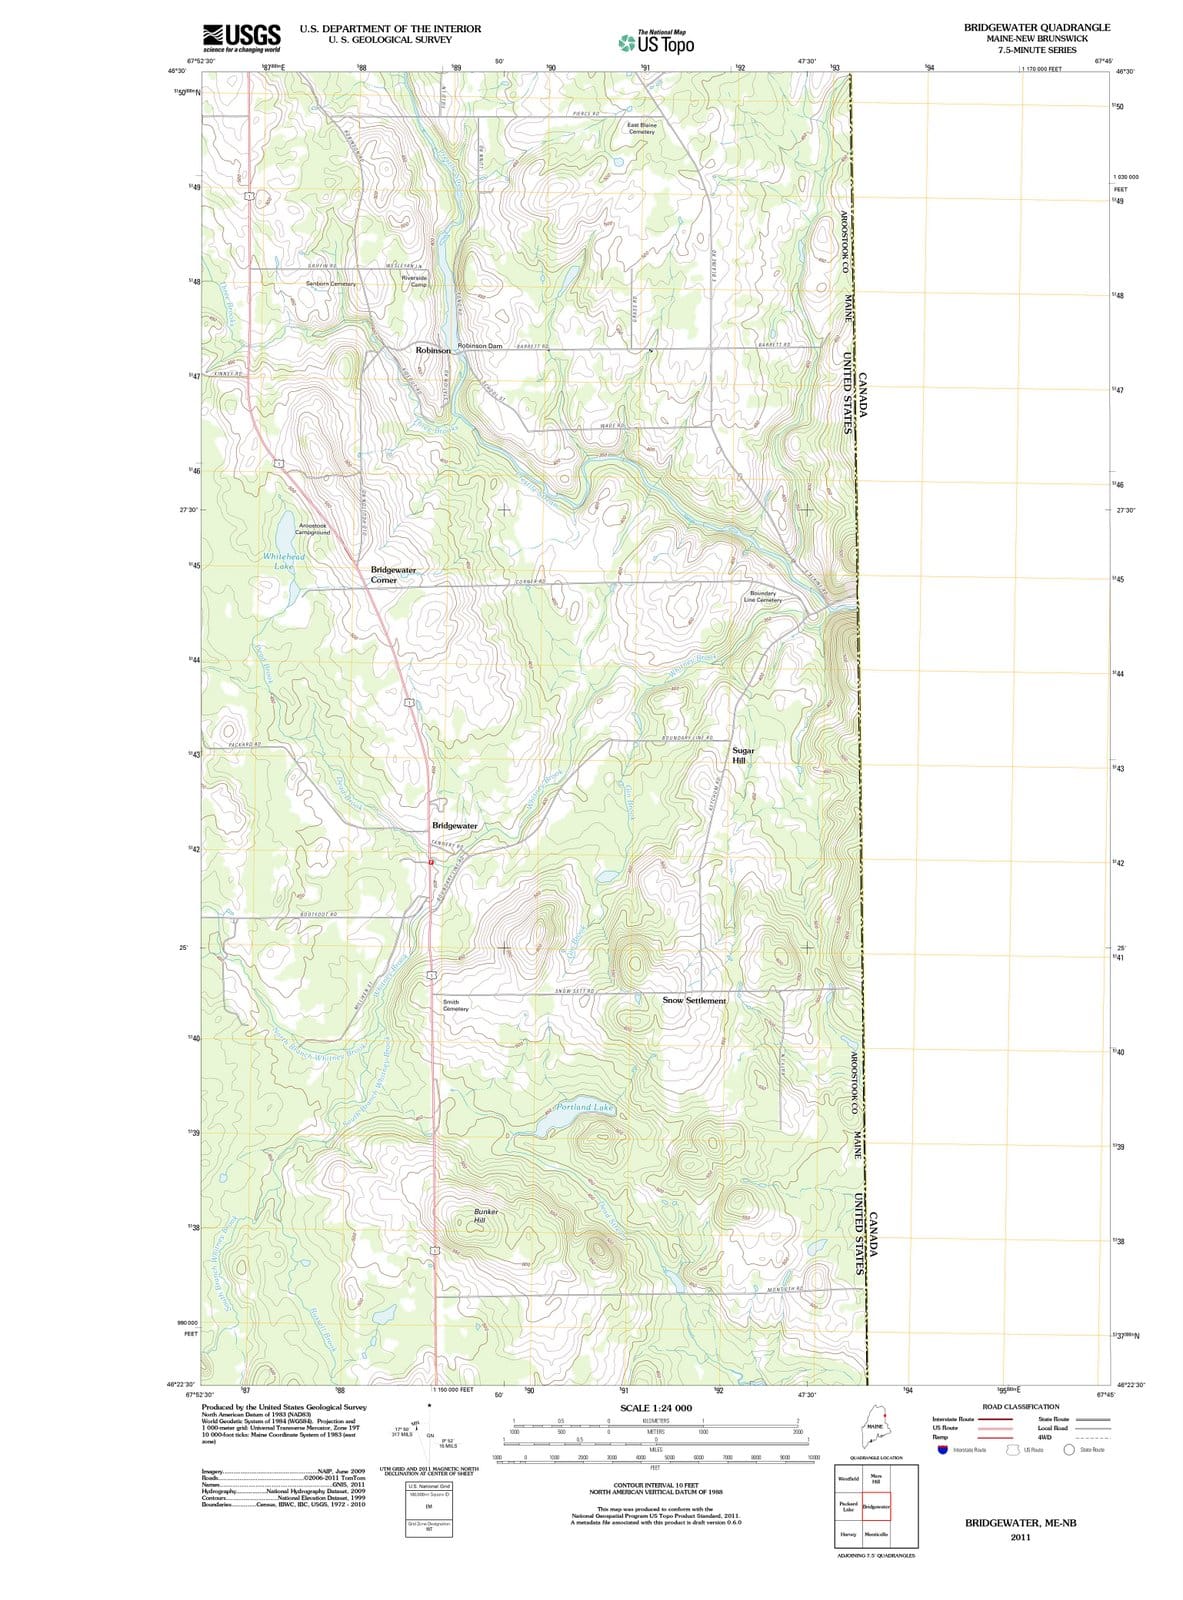 2011 Bridgewater, ME - Maine - USGS Topographic Map